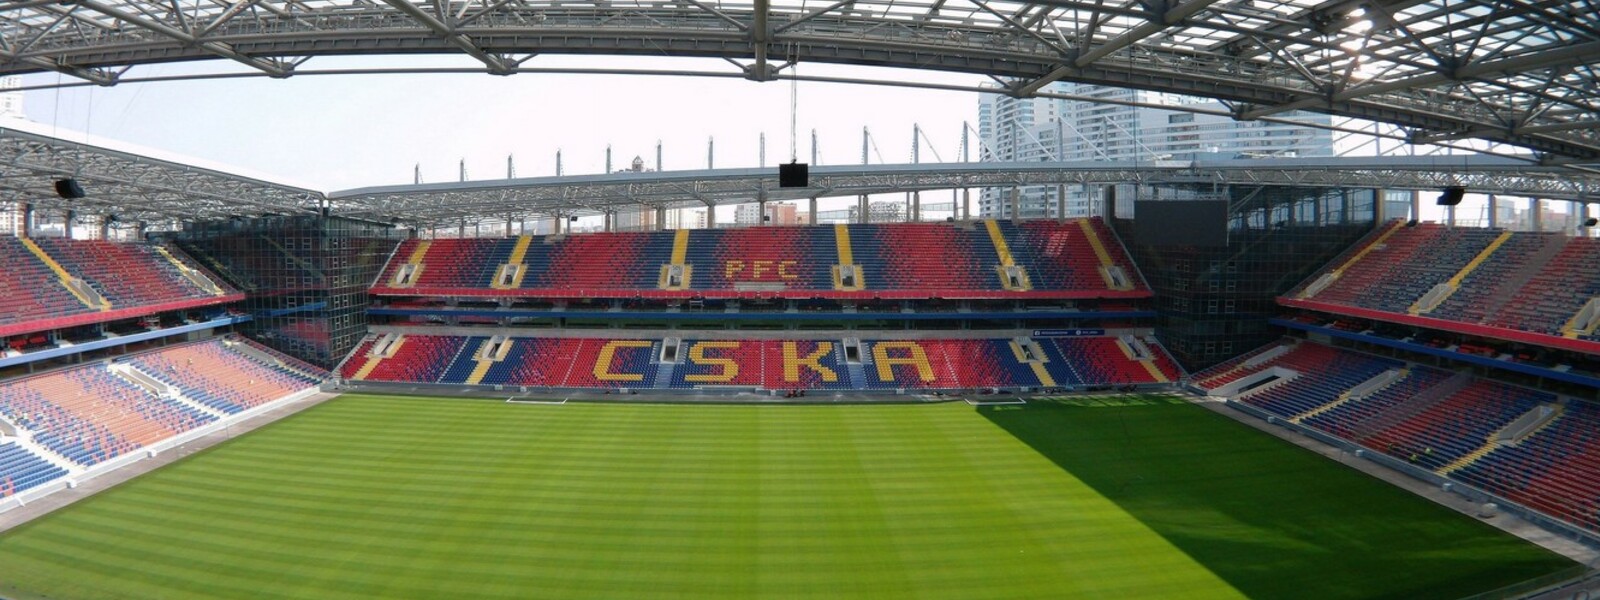 Very big stadion cska tsska arena tsska futbolnyi stadion veb arena